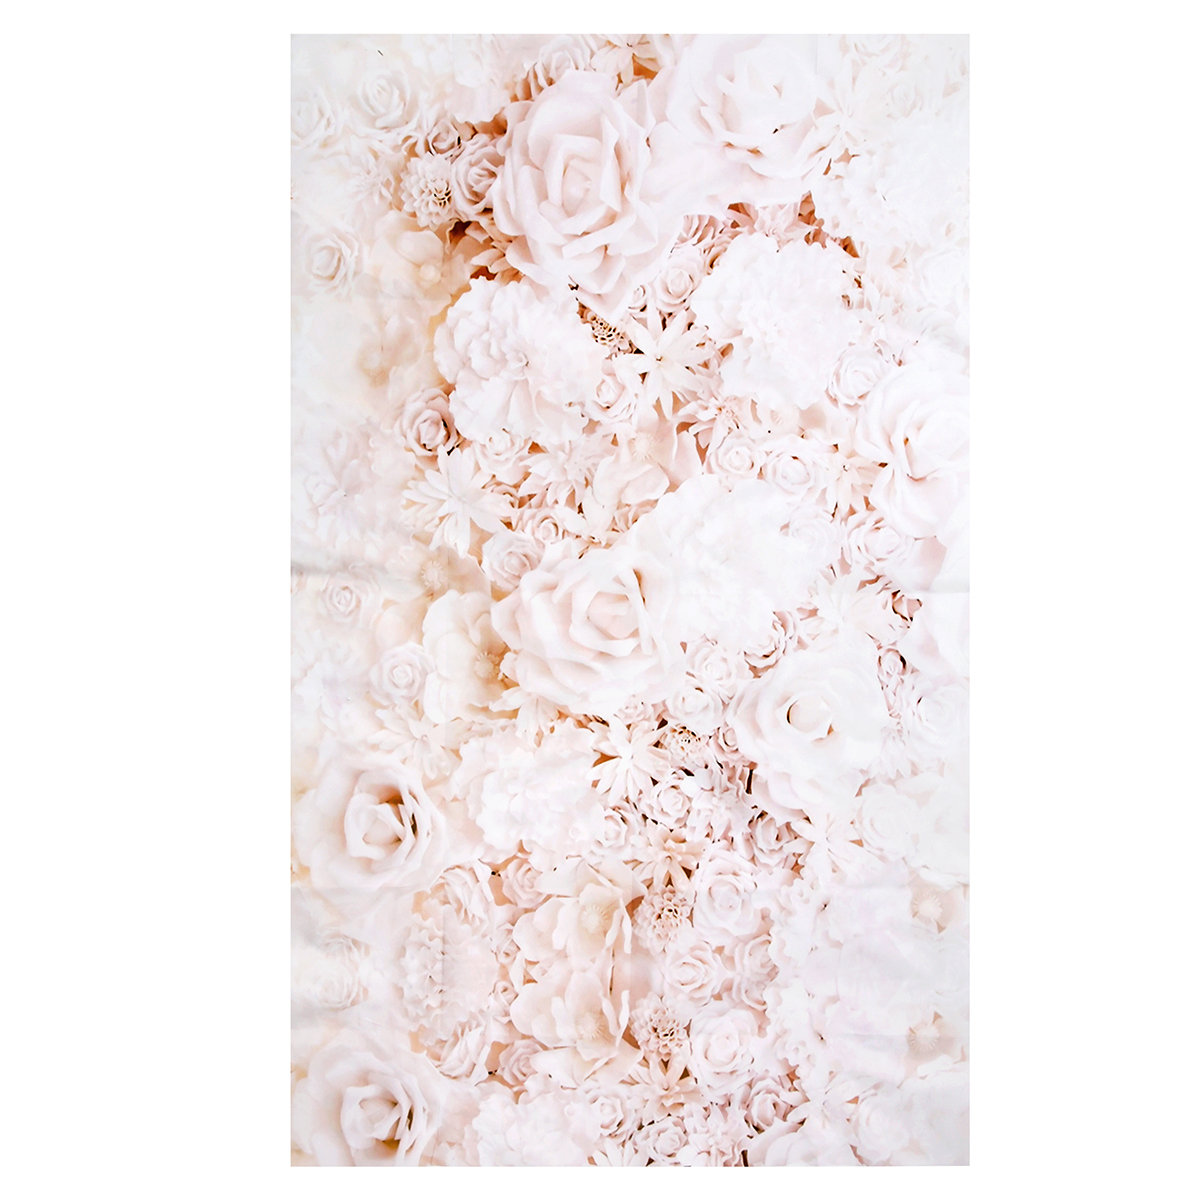 

3x5ft Rose Flowers Photography Backgrounds Vinyl Studio Photo Backdrops